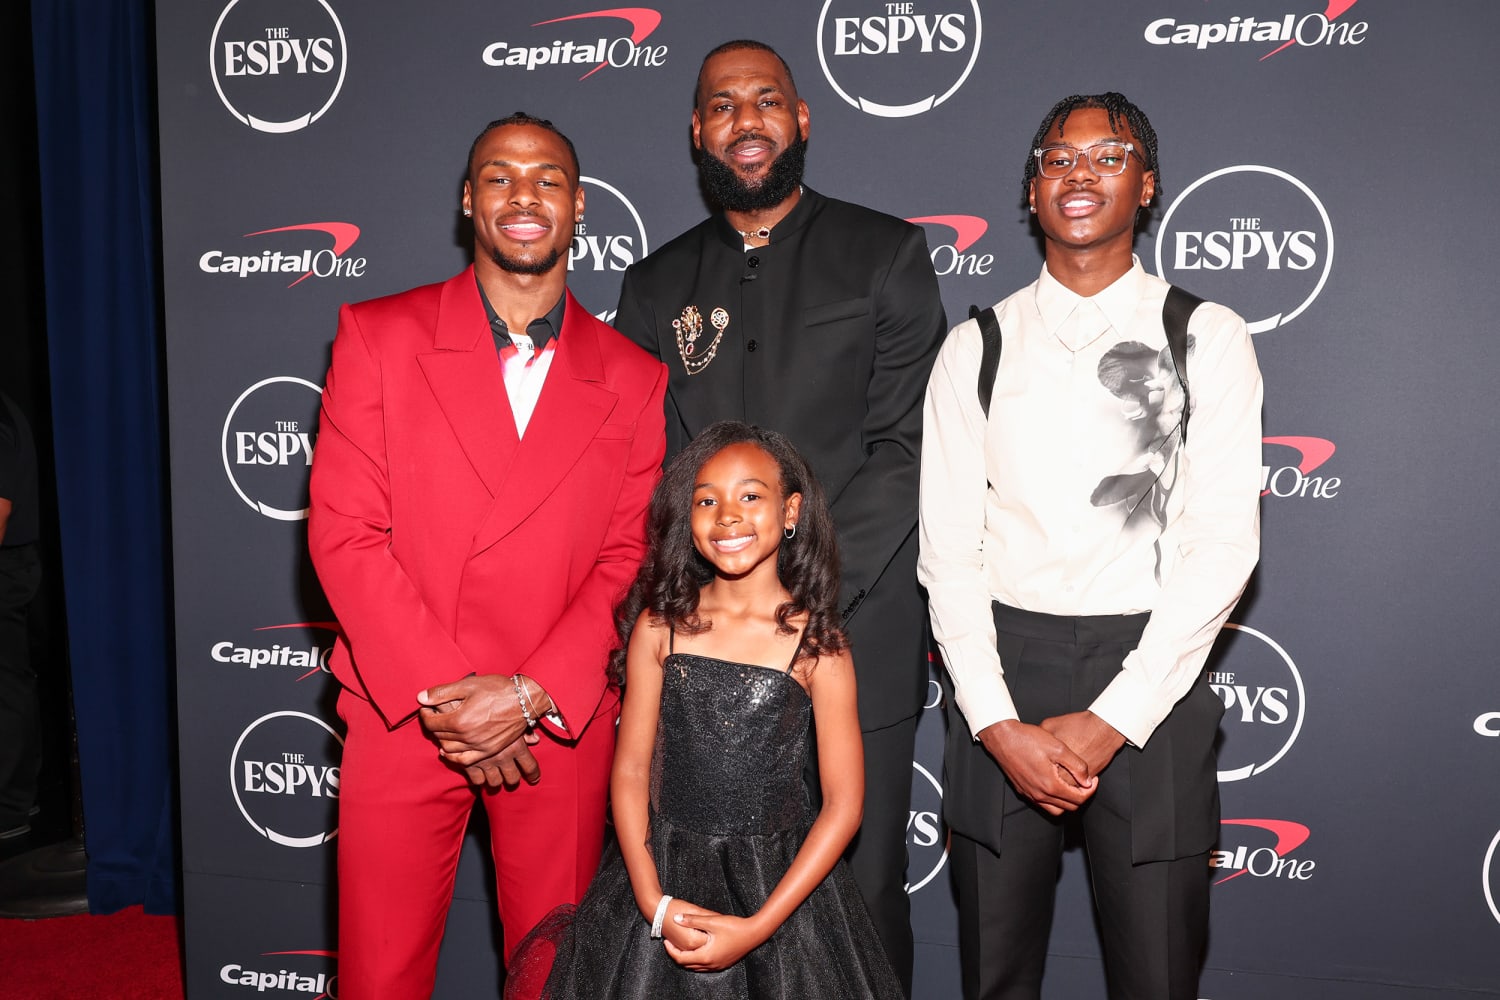 LeBron James' Family: Wife Savannah and Kids Bronny, Bryce, and Zhuri